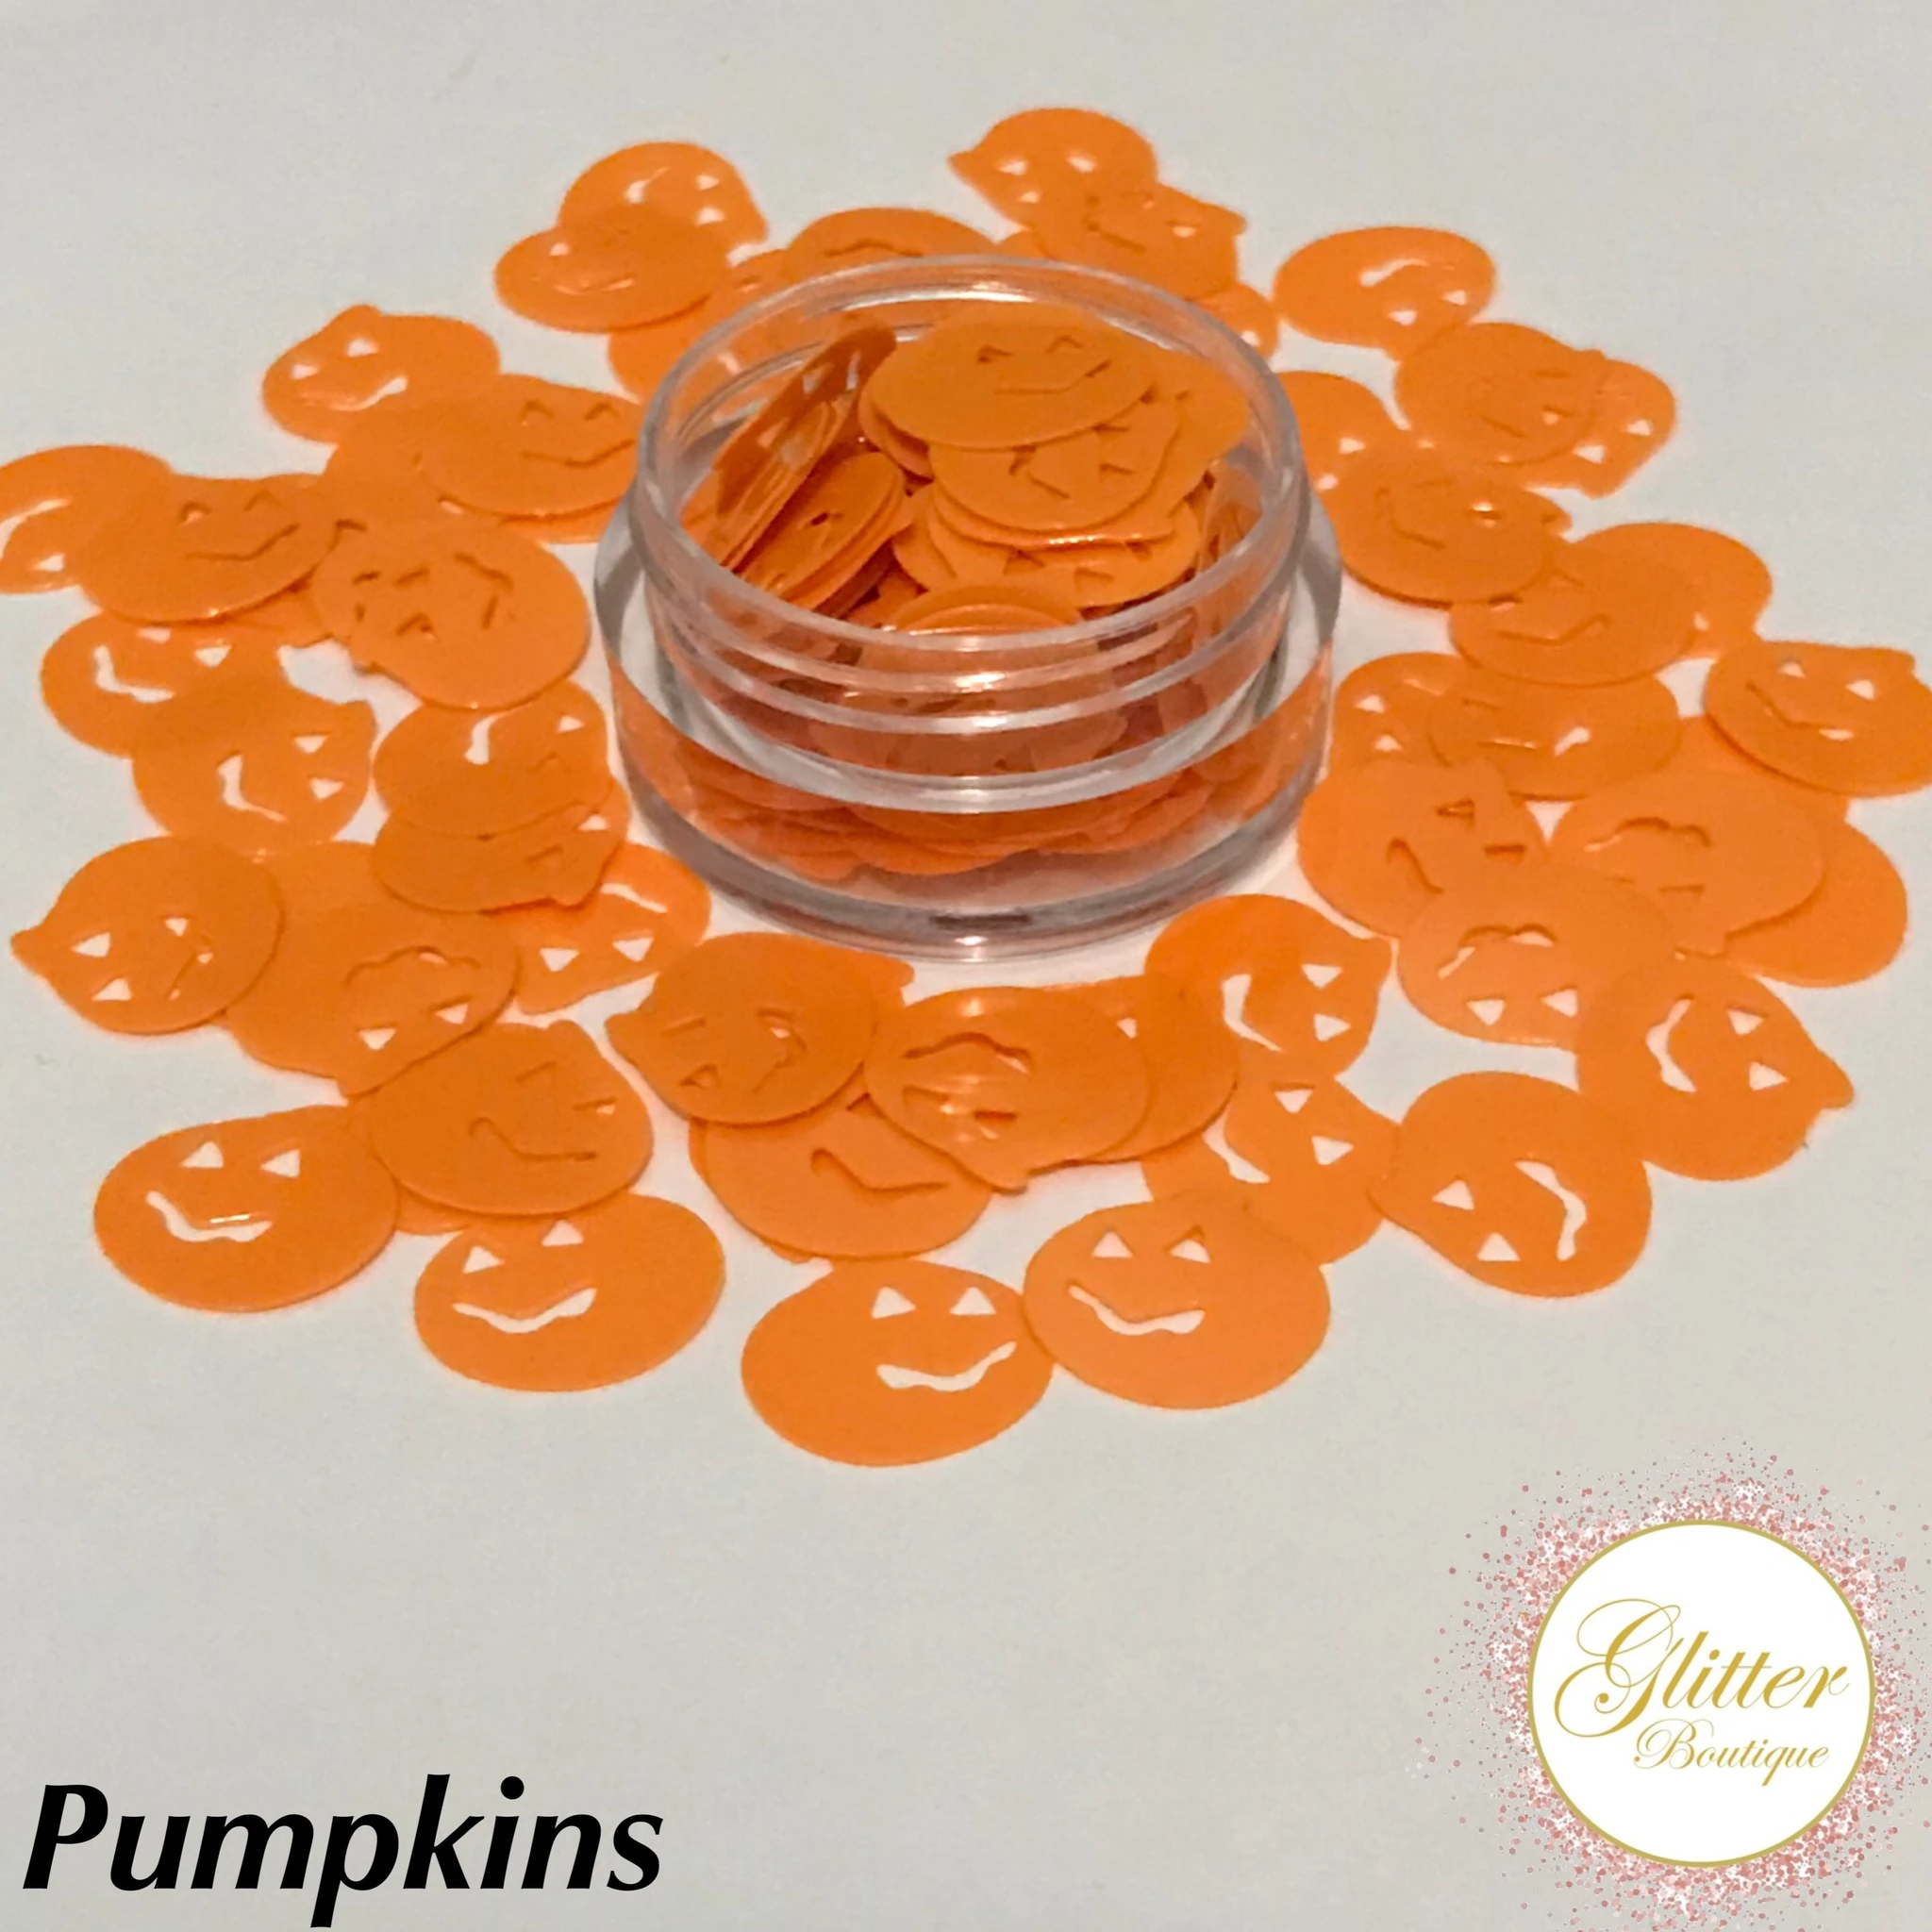 Glitter Boutique - Pumpkins - Creata Beauty - Professional Beauty Products